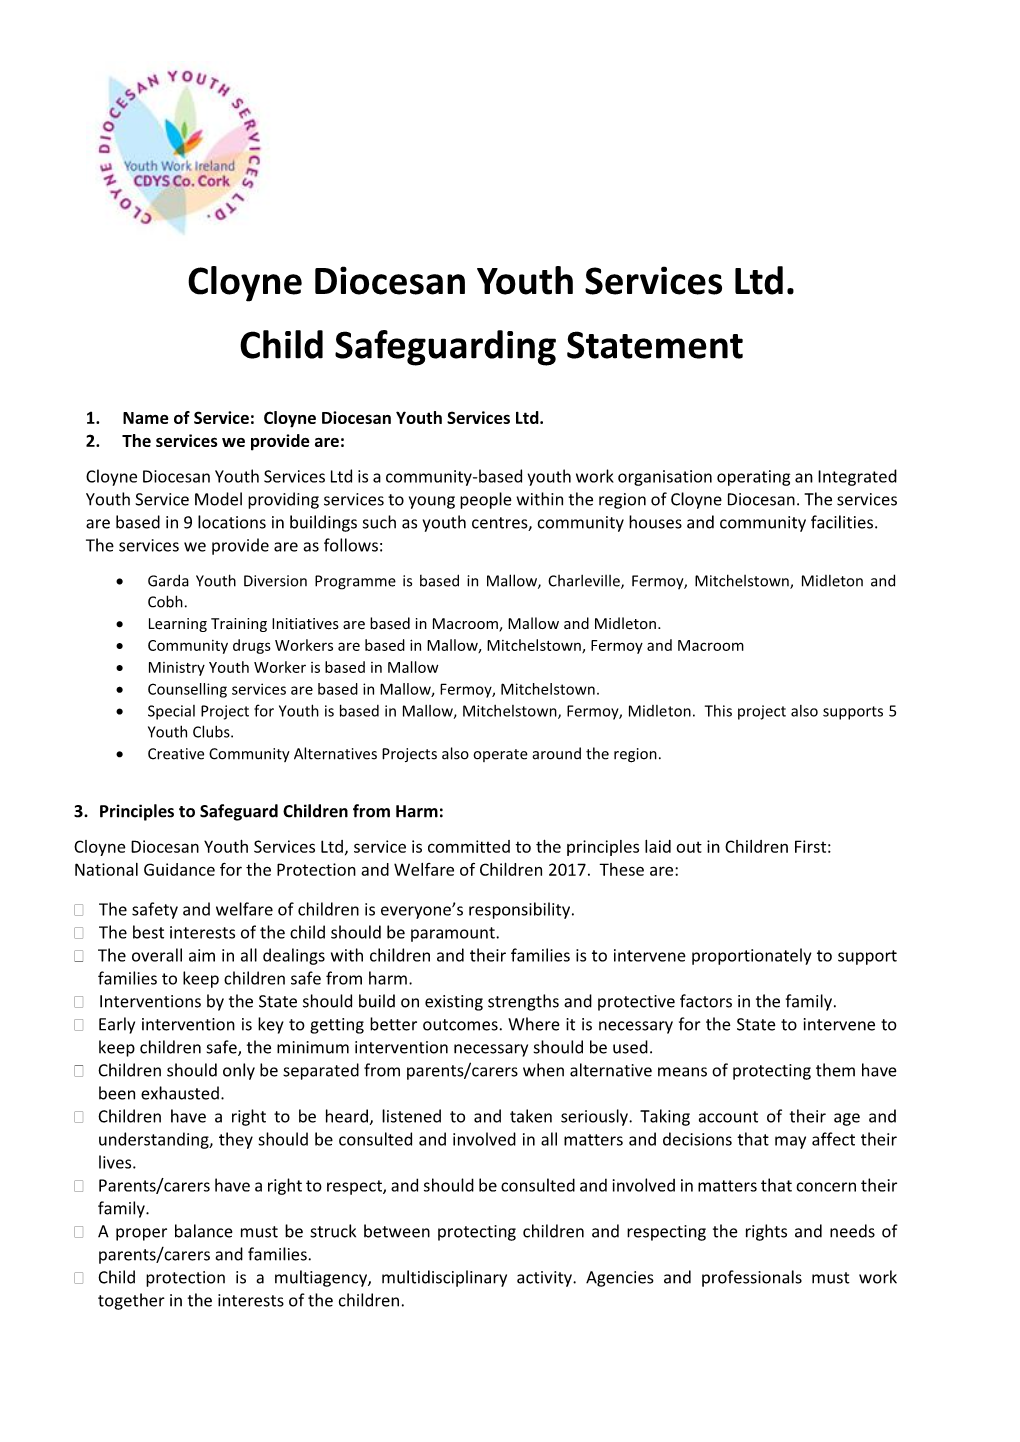 Cloyne Diocesan Youth Services Ltd. Child Safeguarding Statement